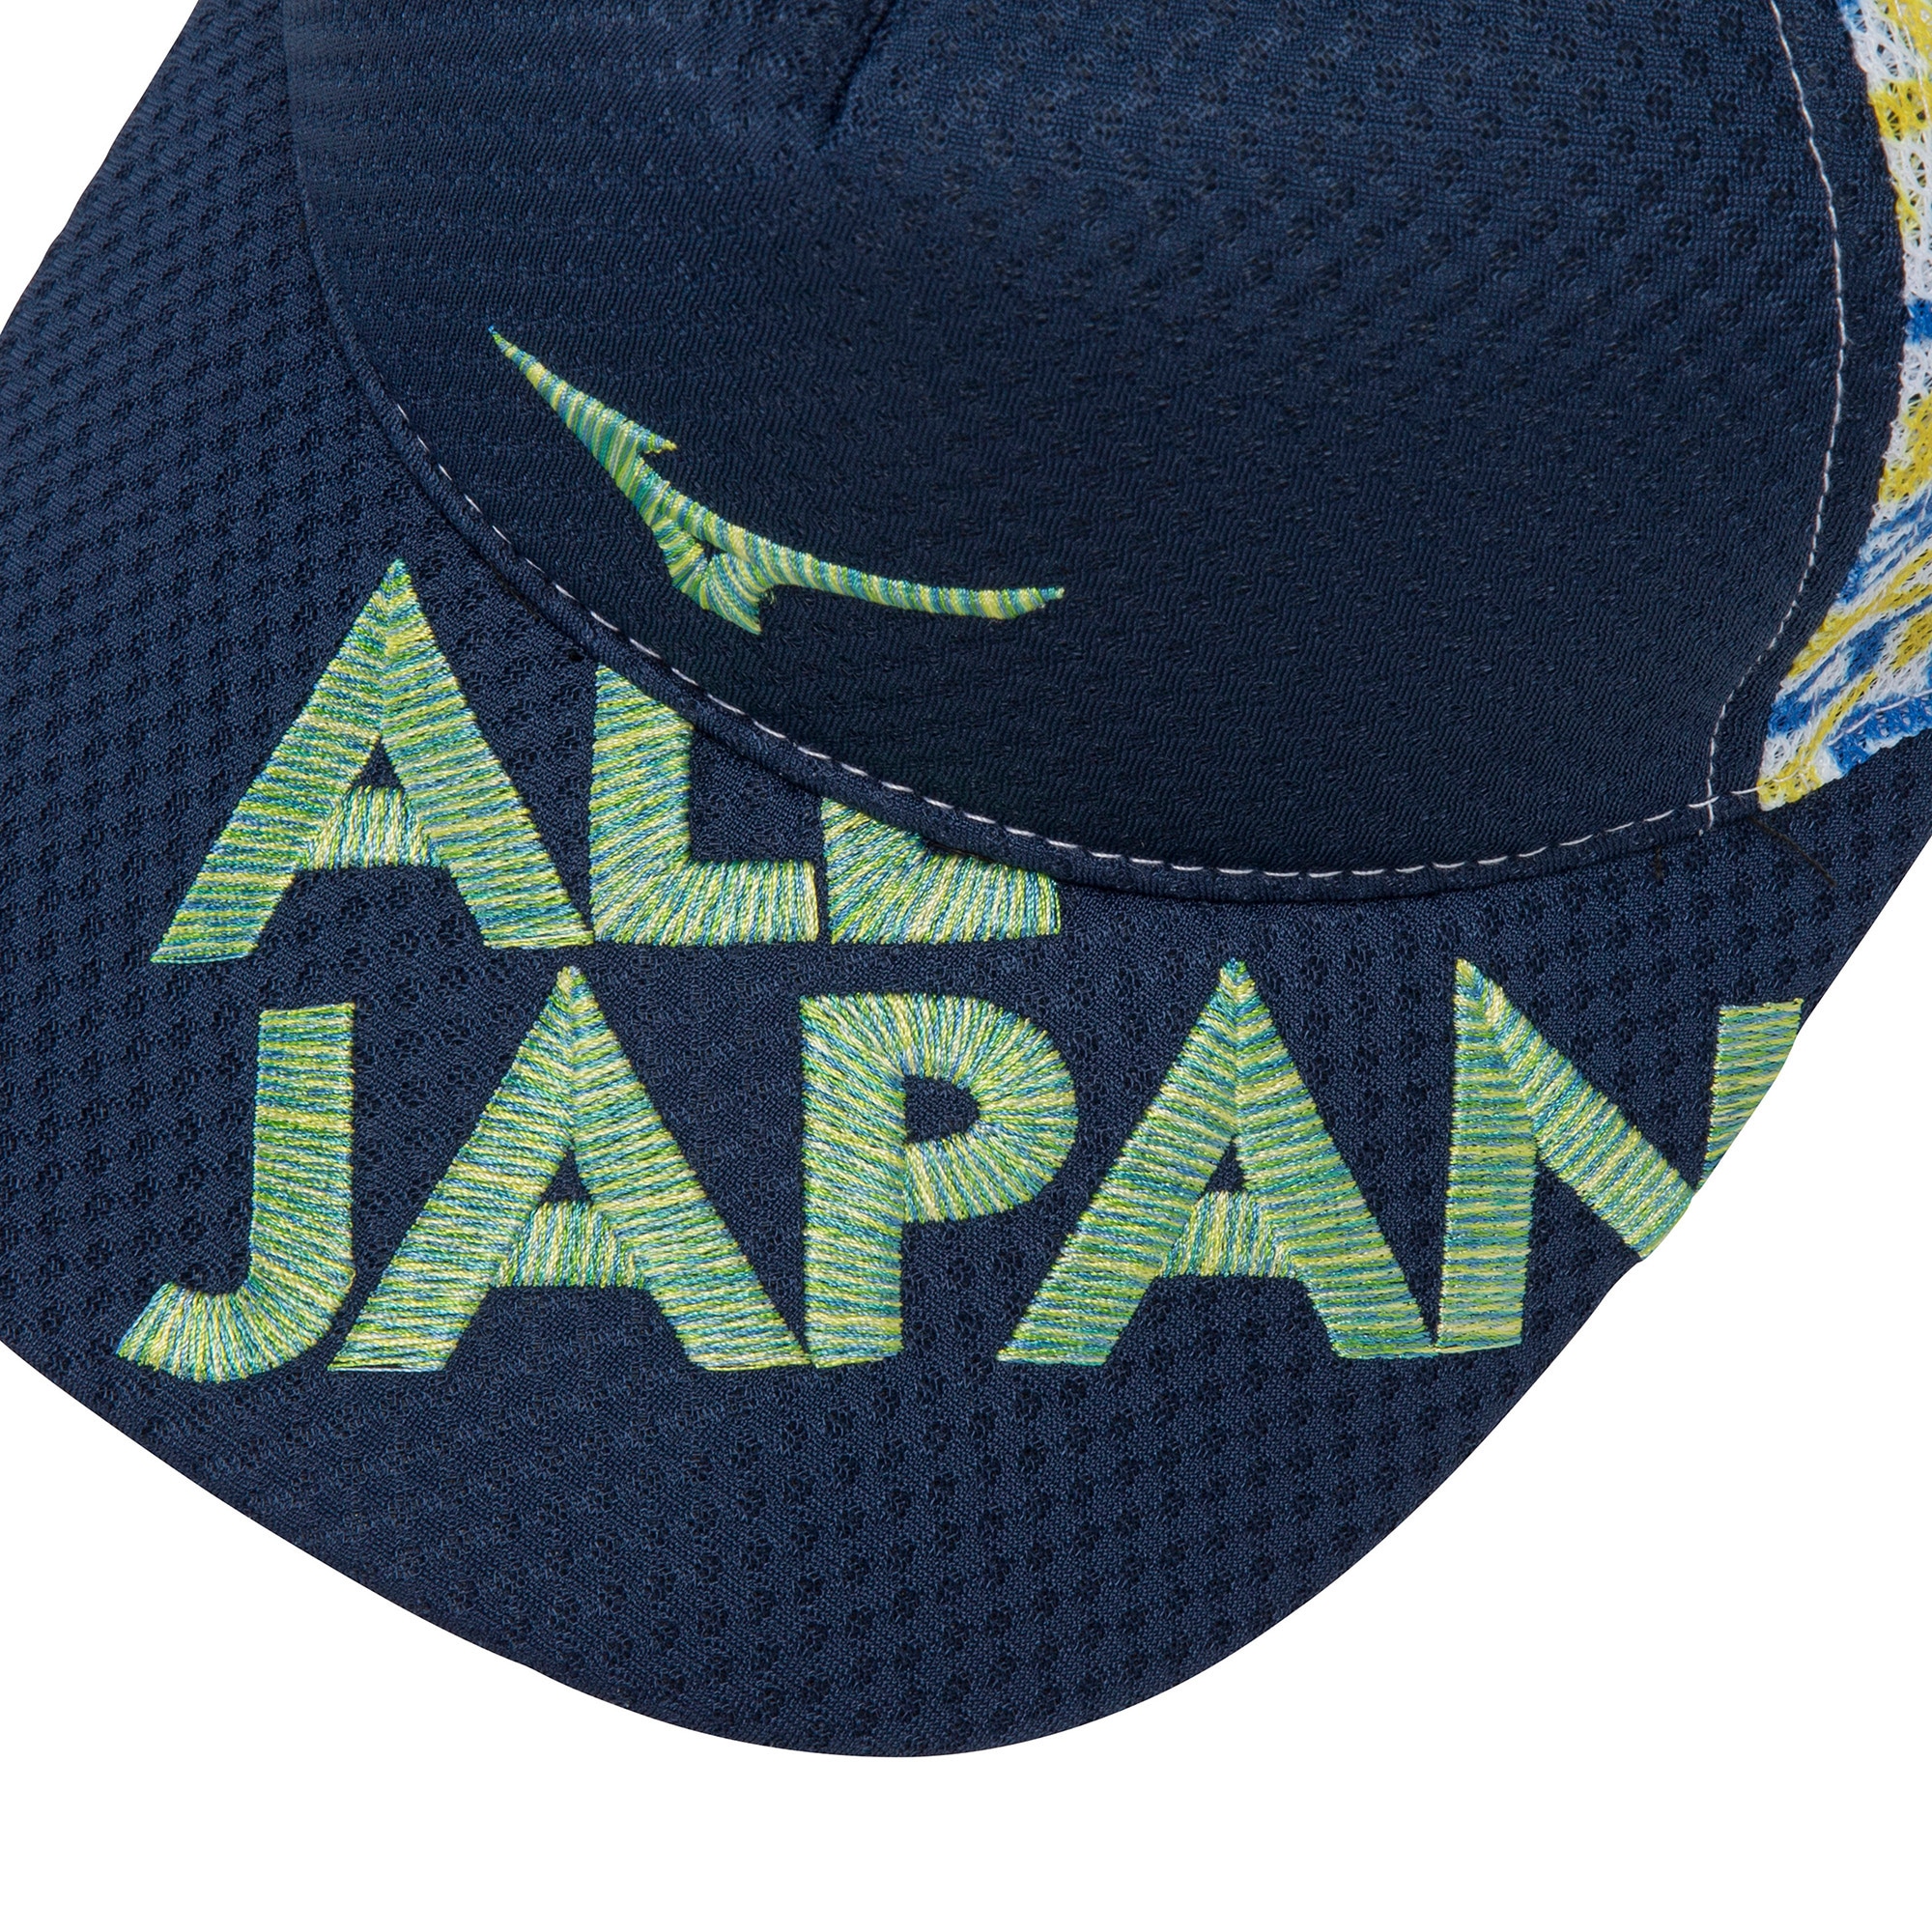 ALL JAPANキャップ[ユニセックス]|62JWAZ12|キャップ|テニス ...